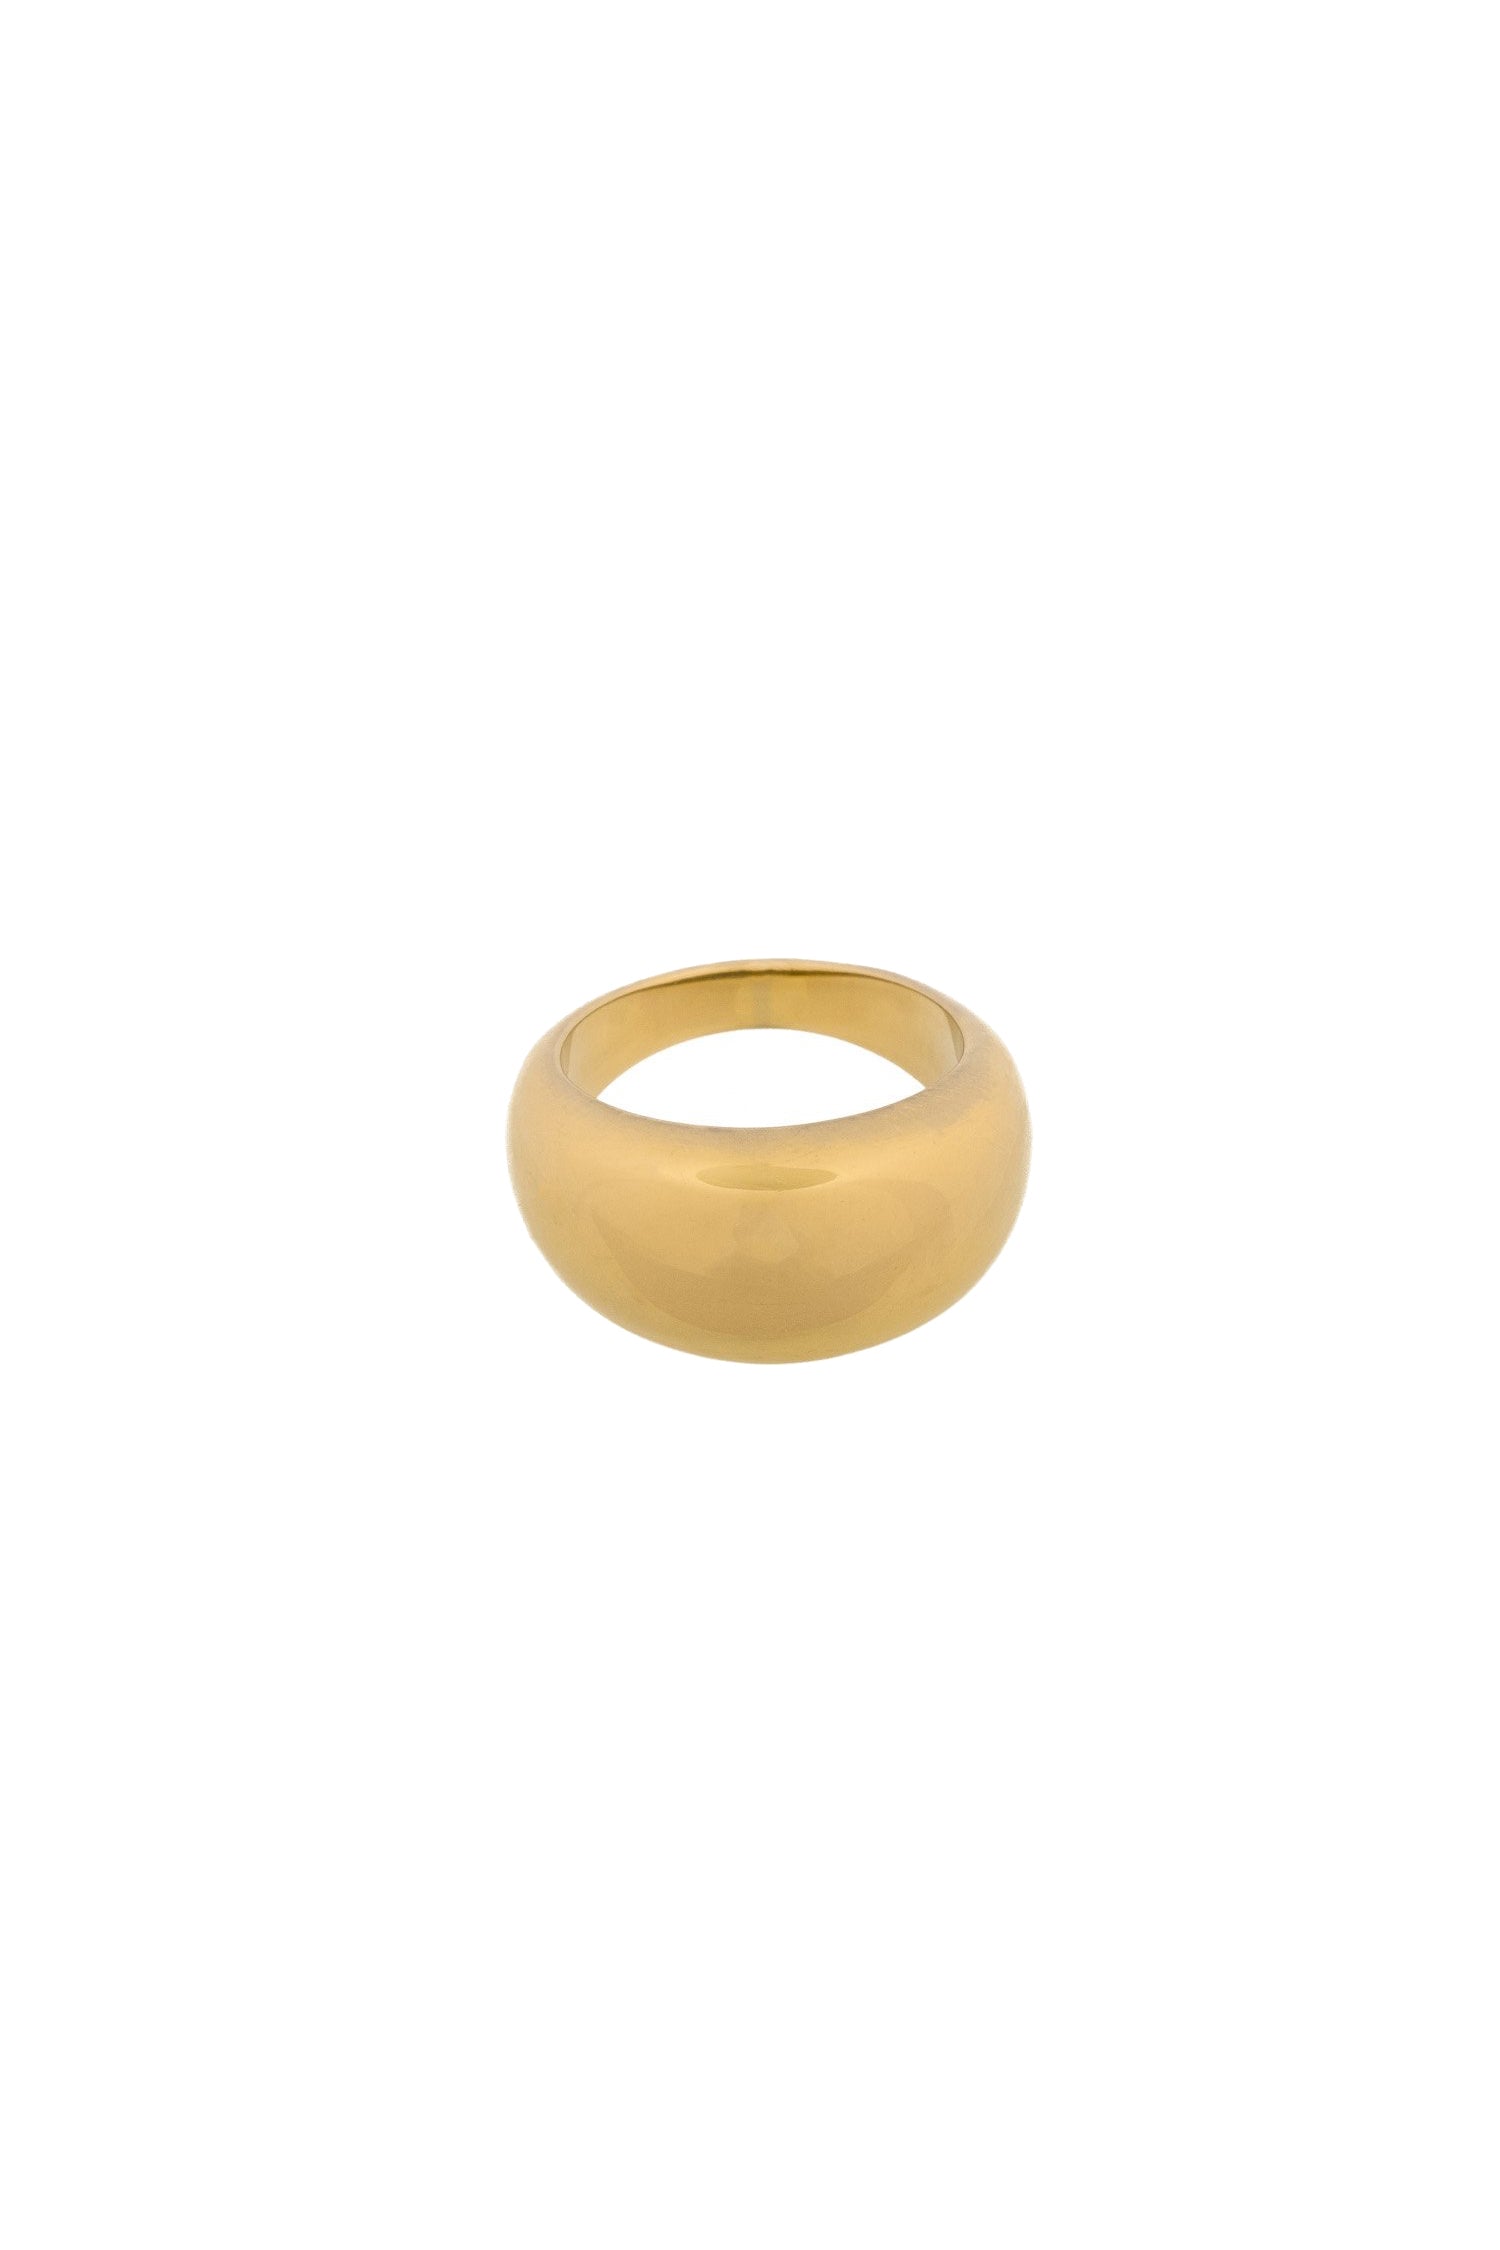 Bandhu Bouble Ring - Gold - RUM Amsterdam